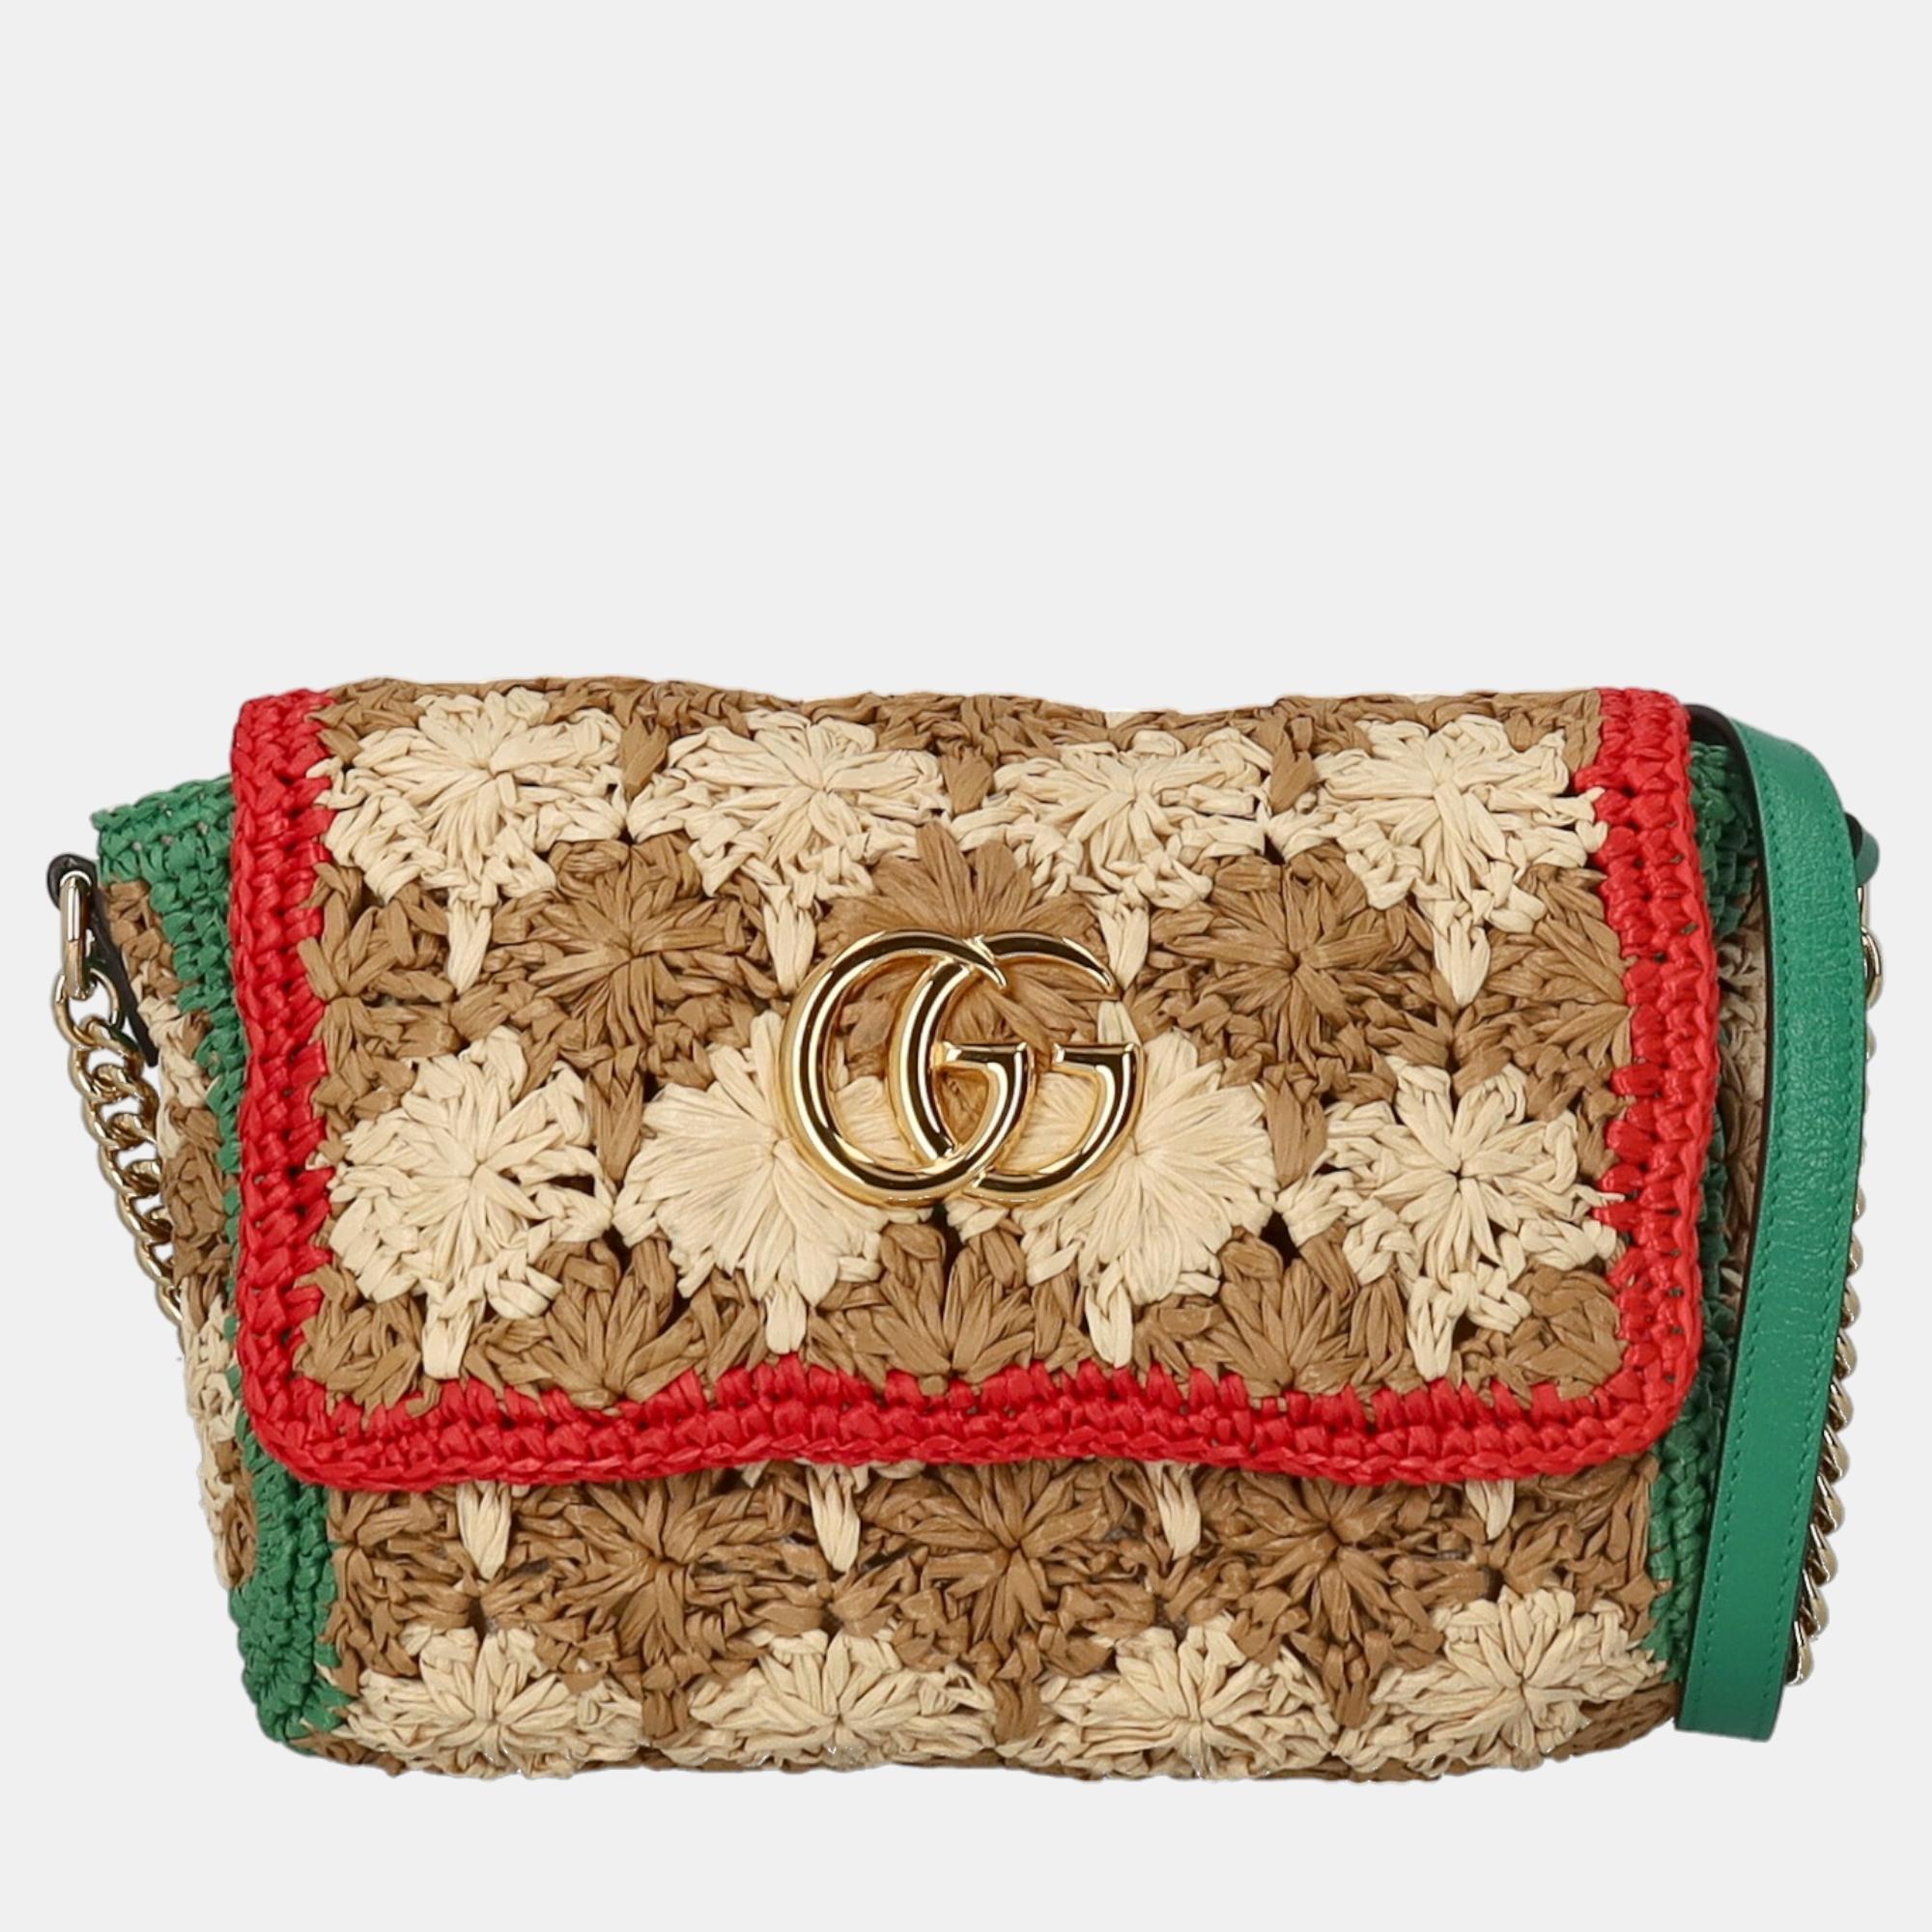 Gucci  Women's Eco-Friendly Fabric Cross Body Bag - Beige - One Size